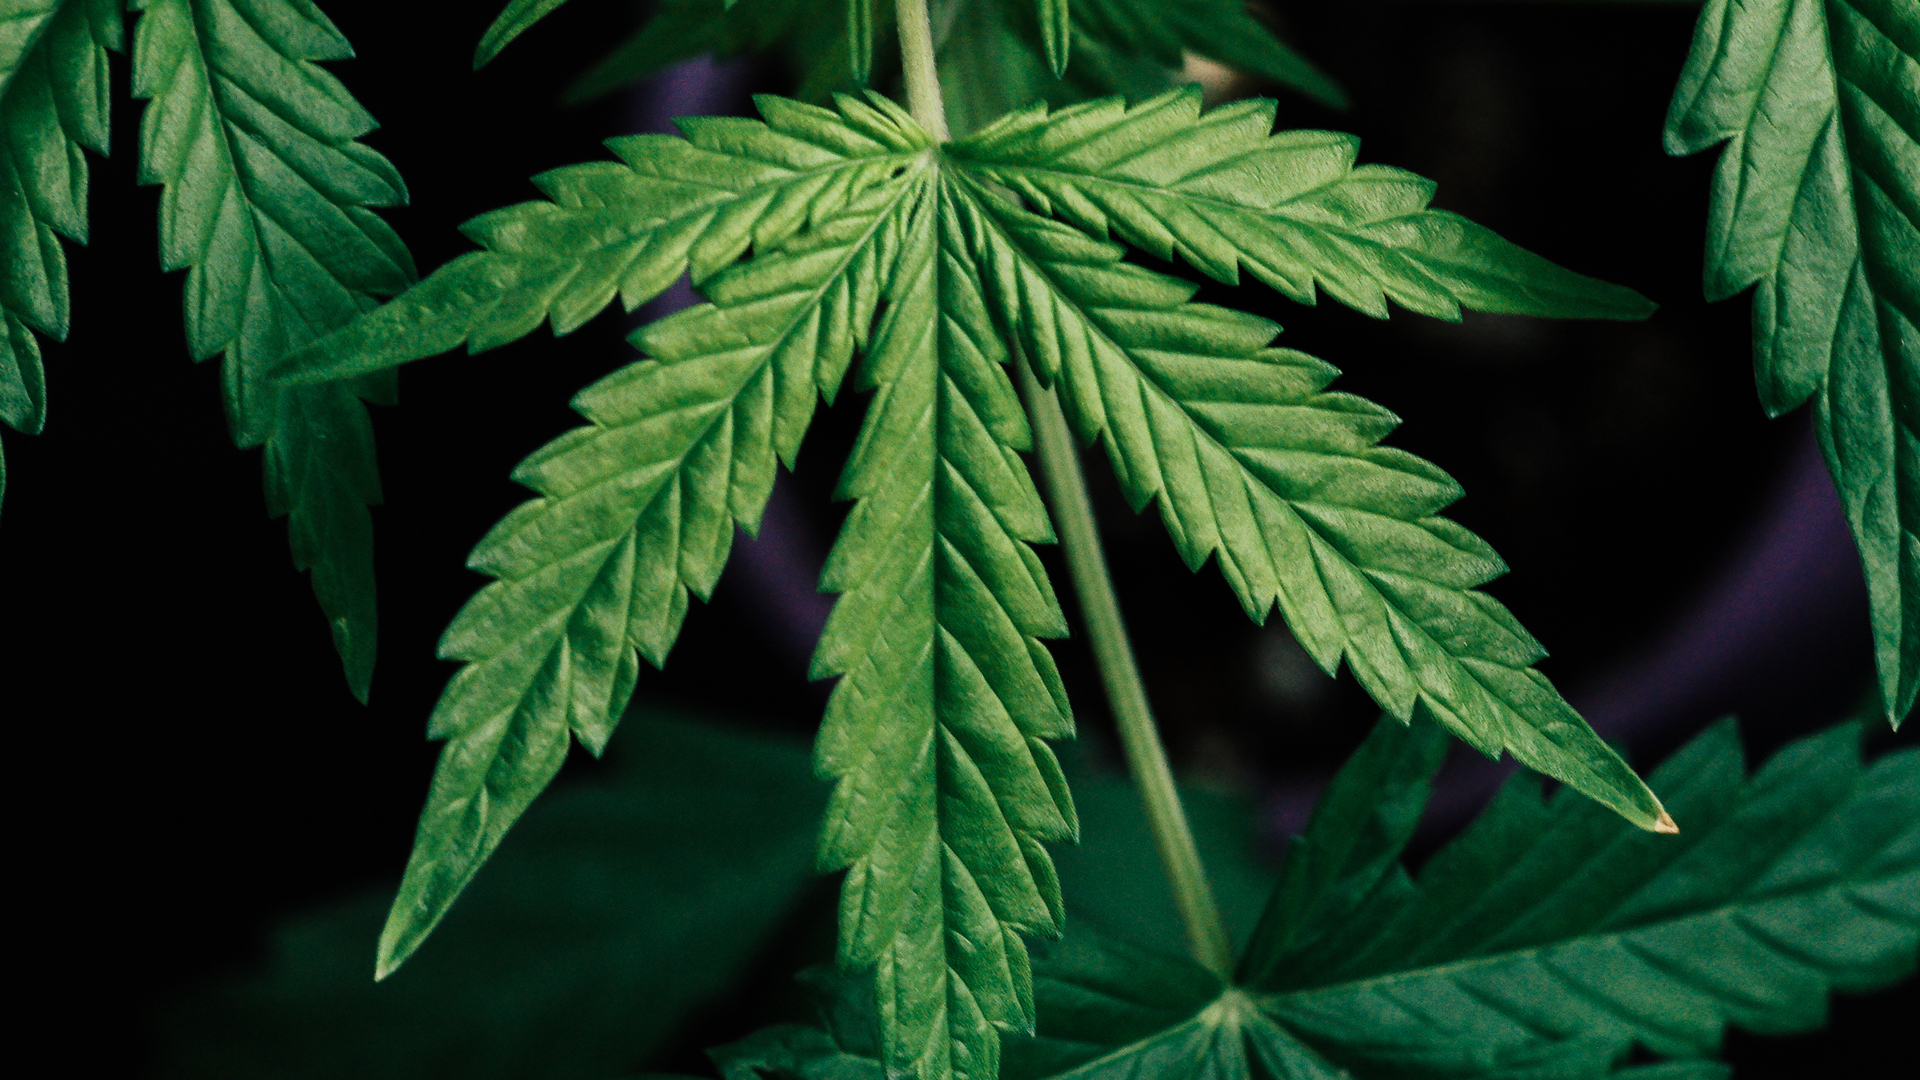 Image of Cannabis leaf